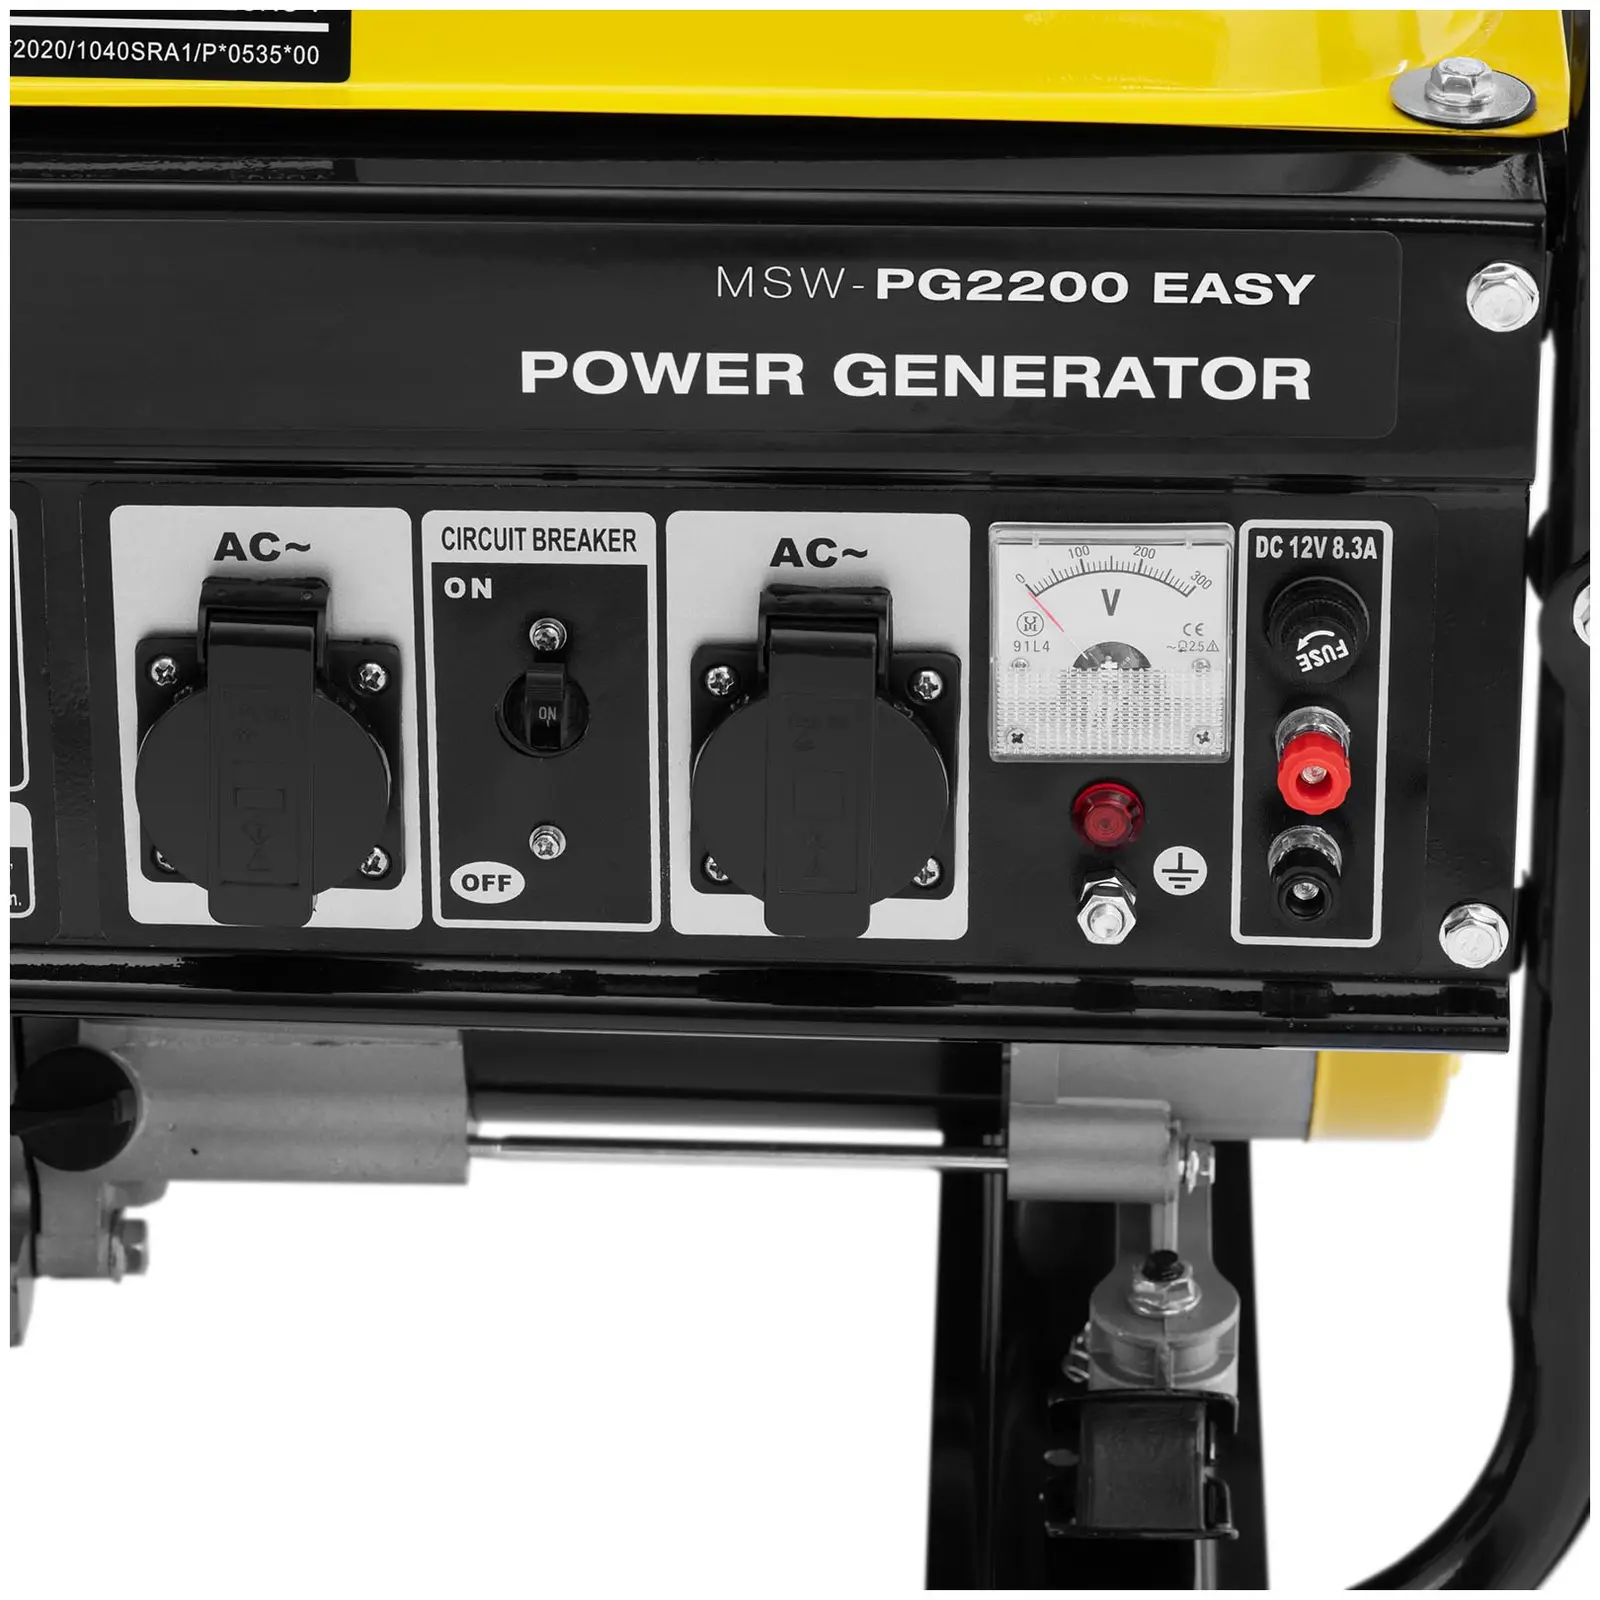 Benzino generatorius – 2200 W – 230 V AC / 12 V DC – rankinis paleidimas / elektra